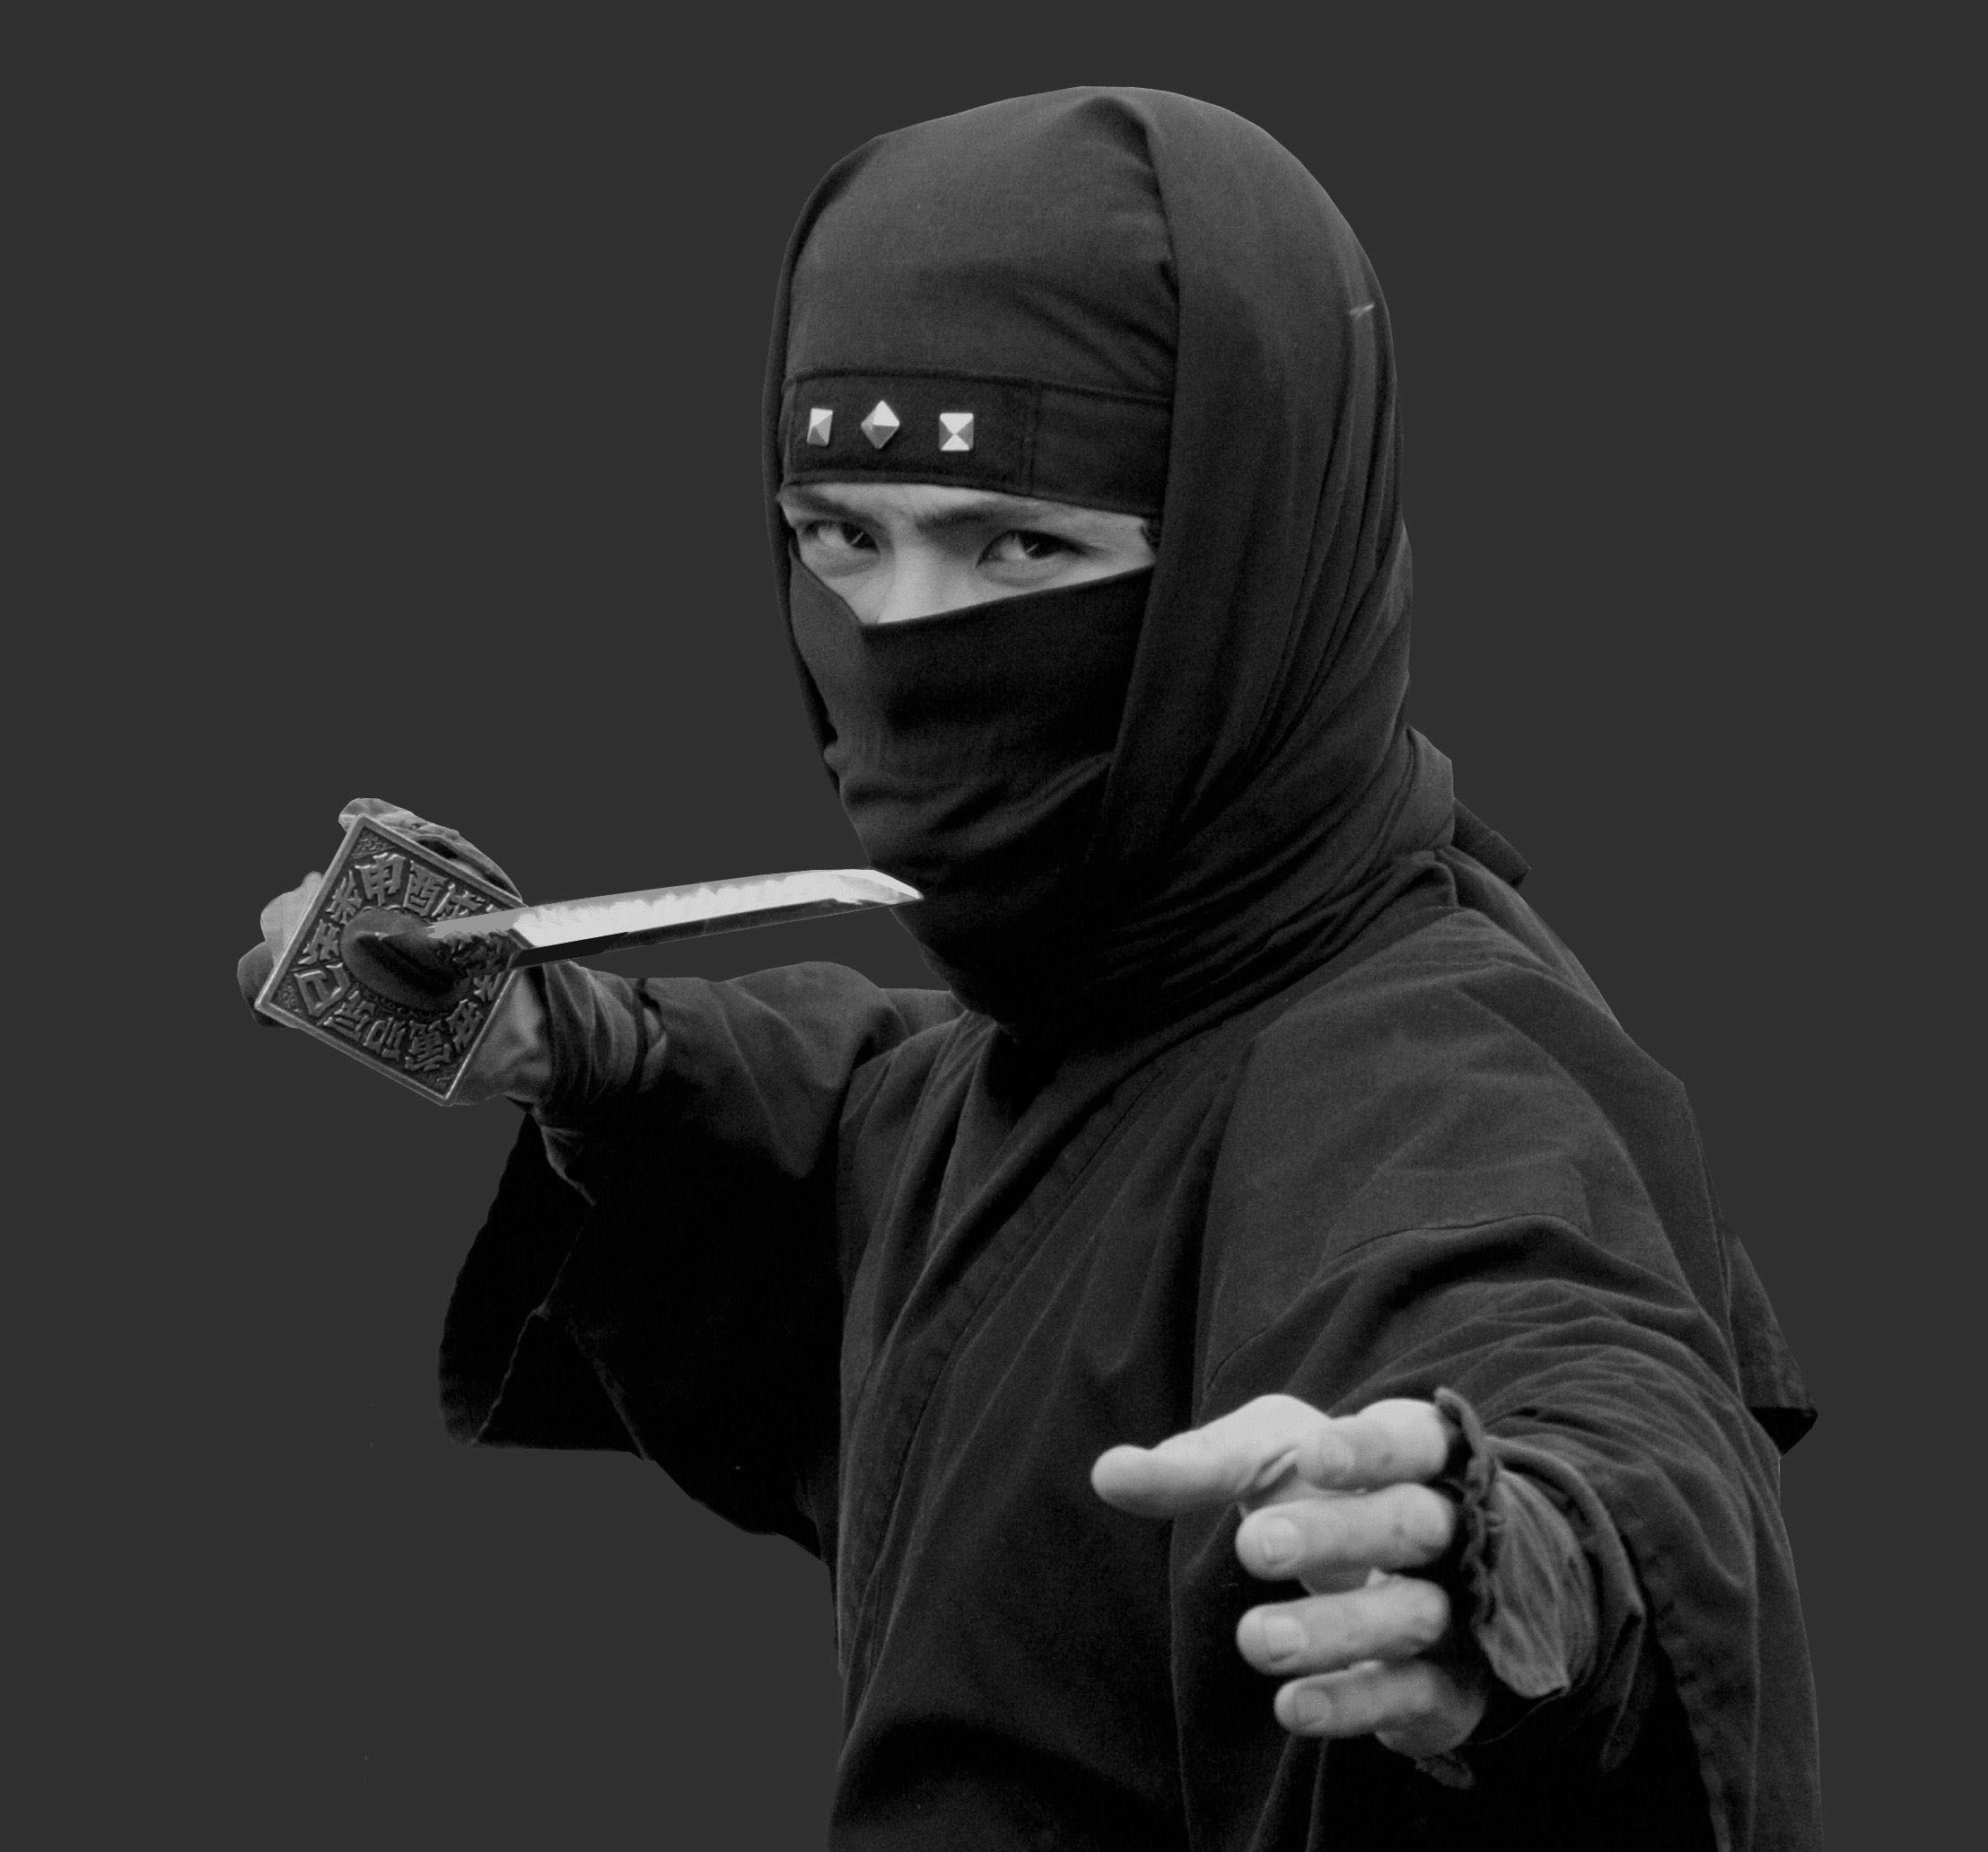 Ninja image